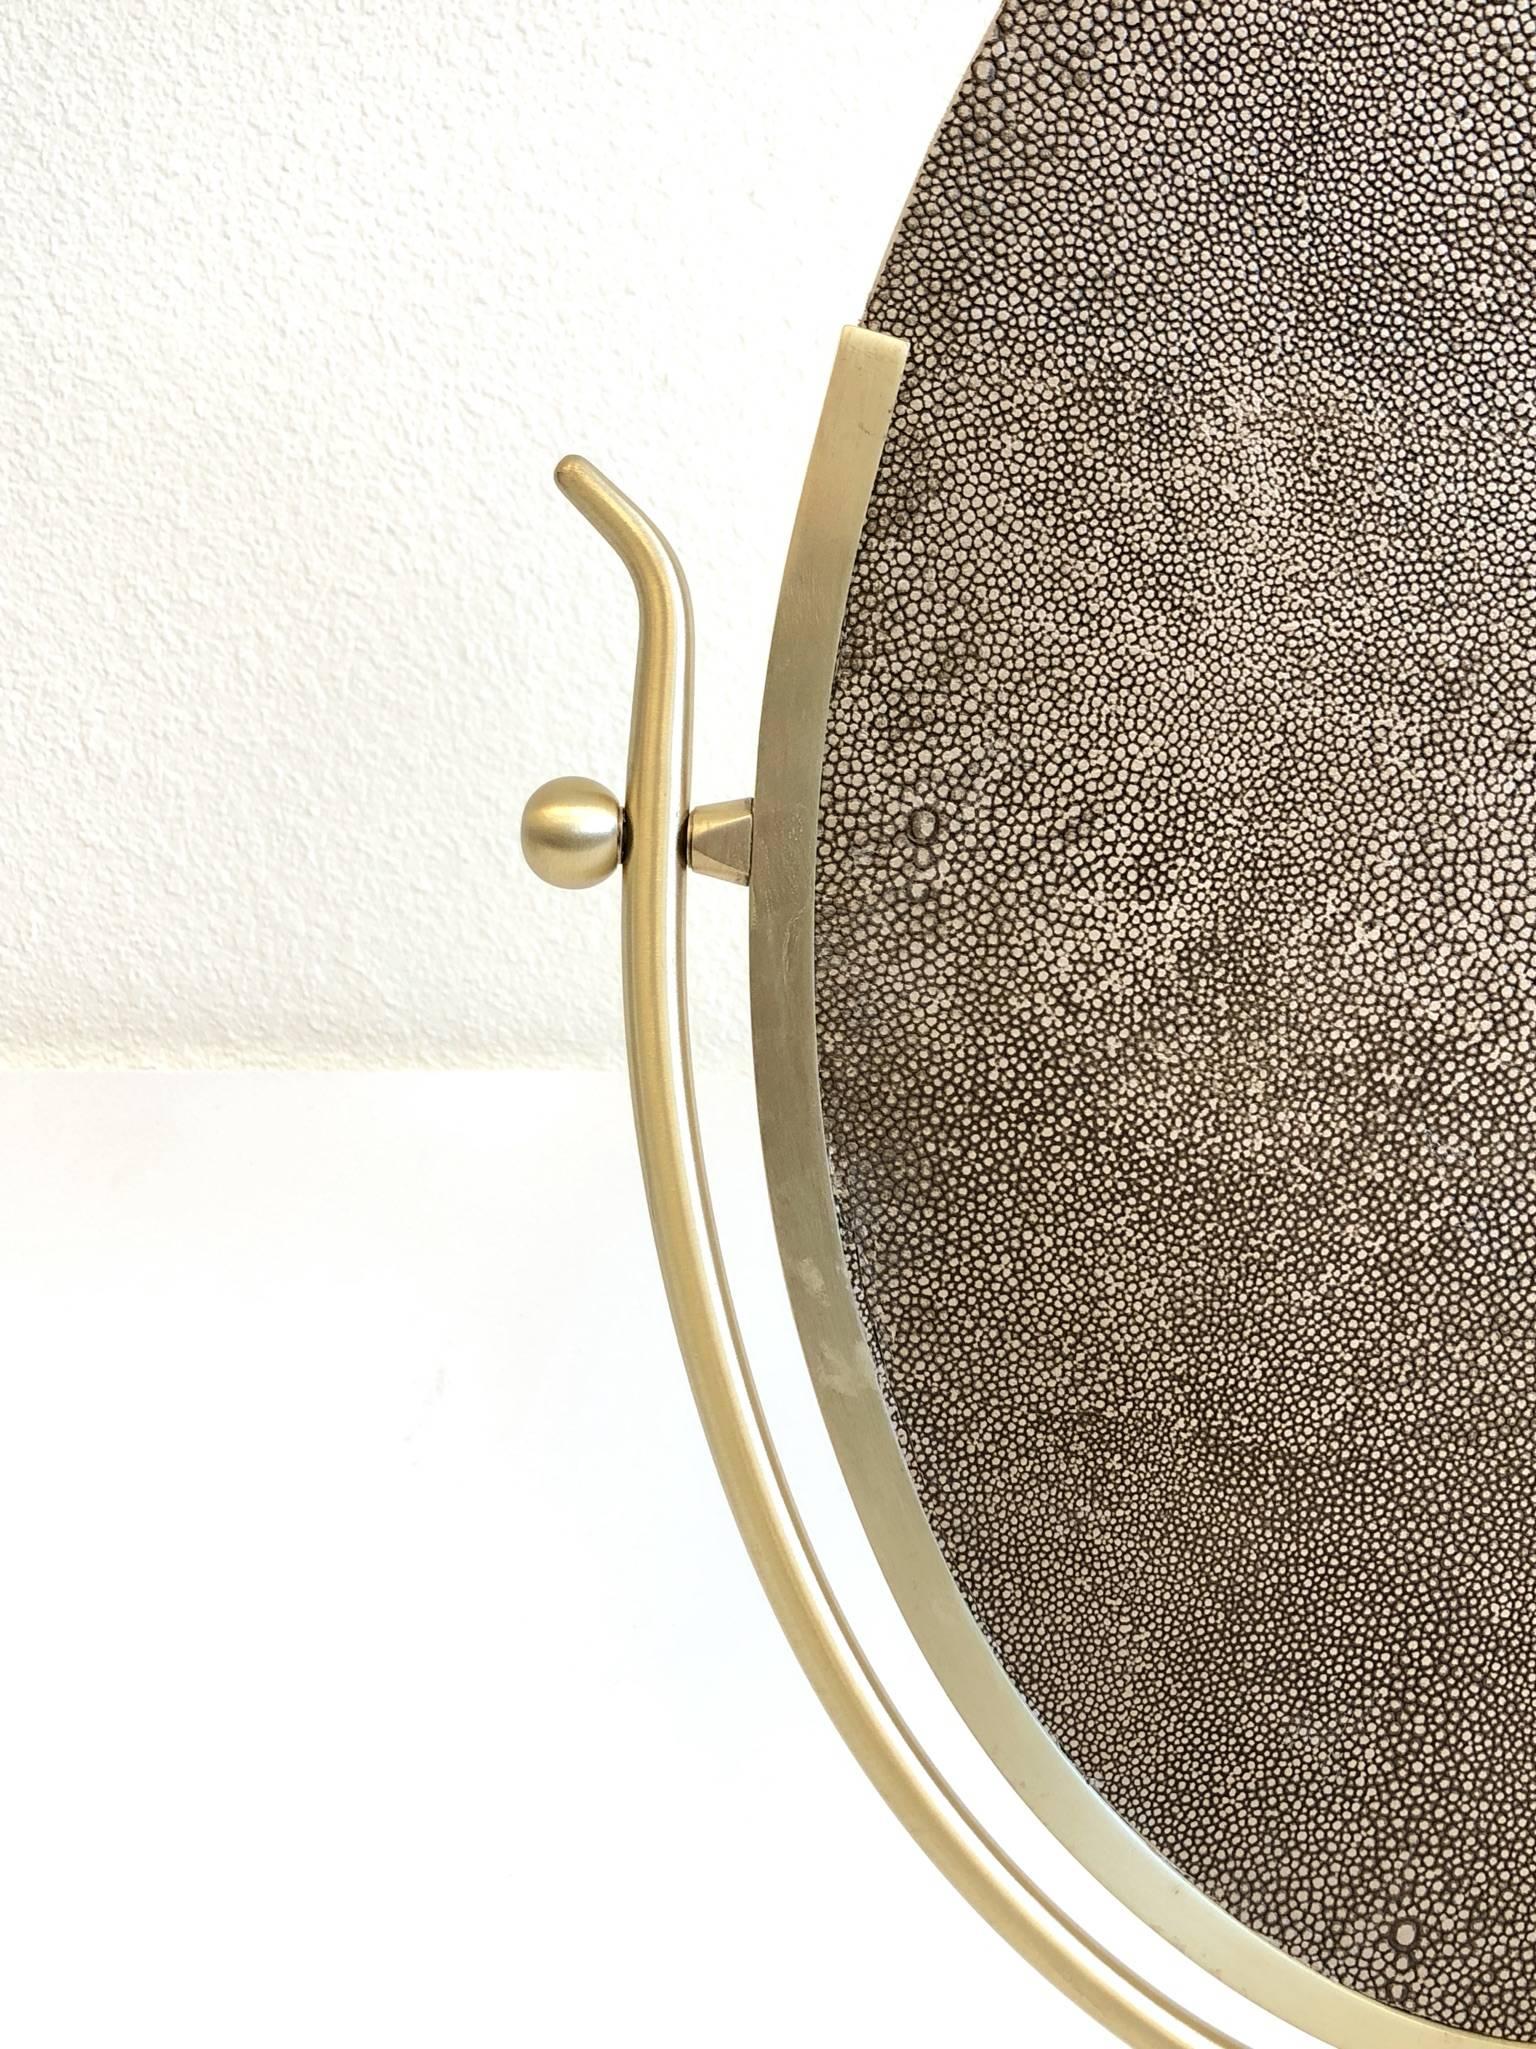 Satin Brass and Leather Vanity Mirror by Charles Hollis Jones 3